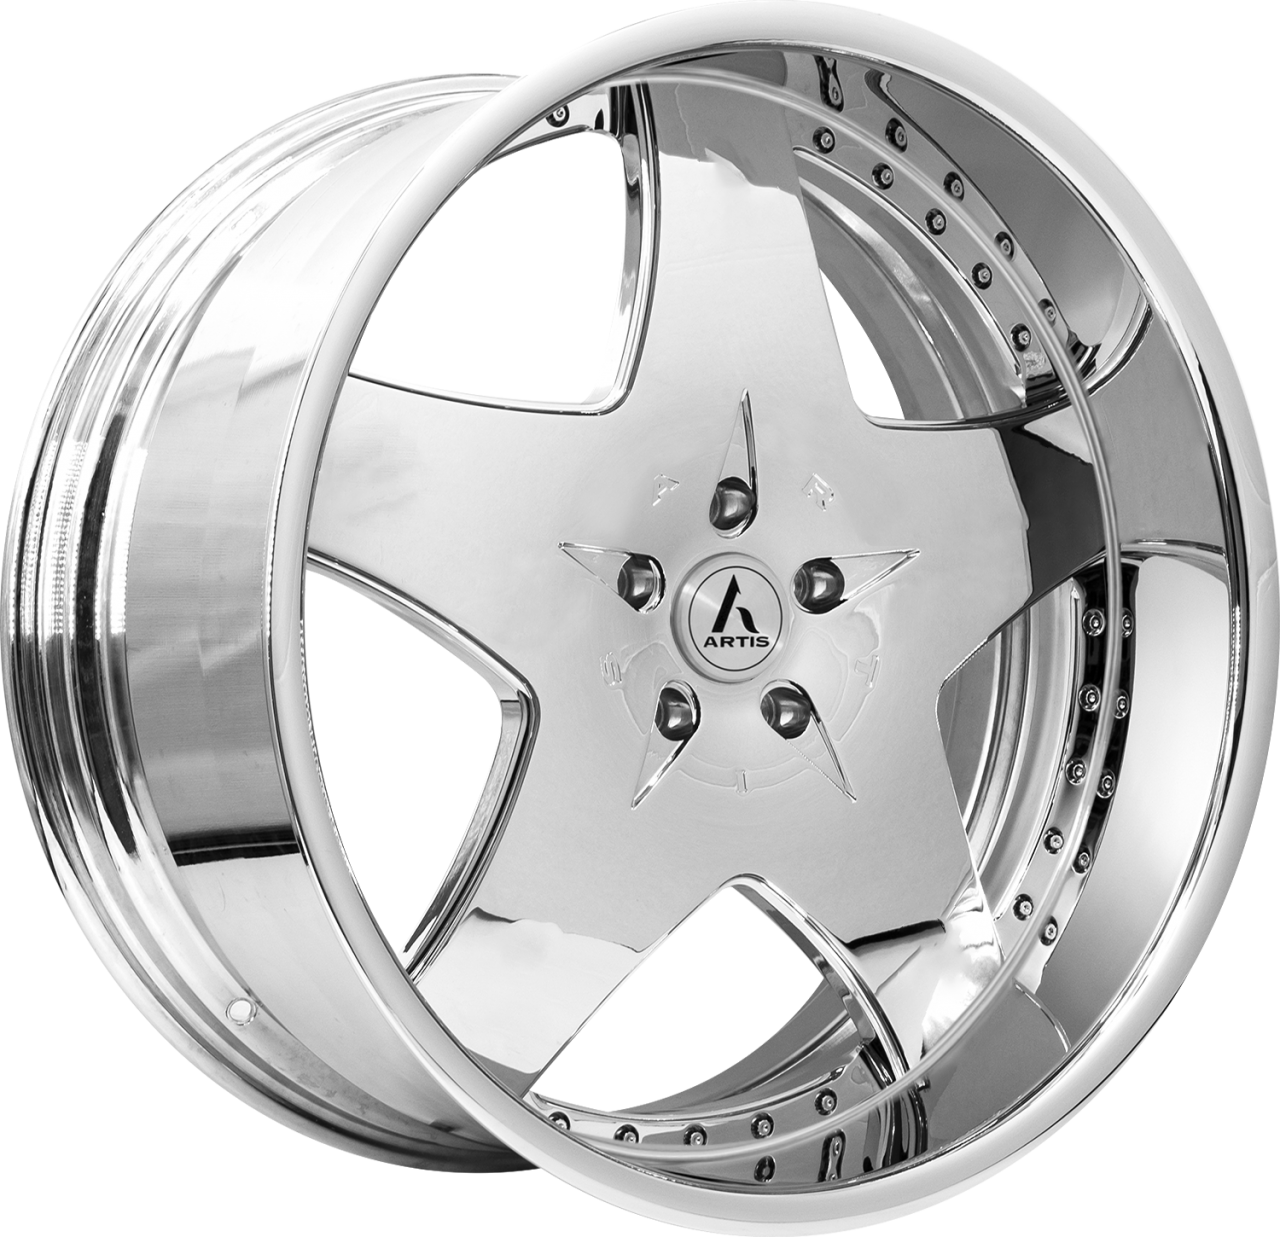 Artis Forged Cashville-M wheel with Chrome finish